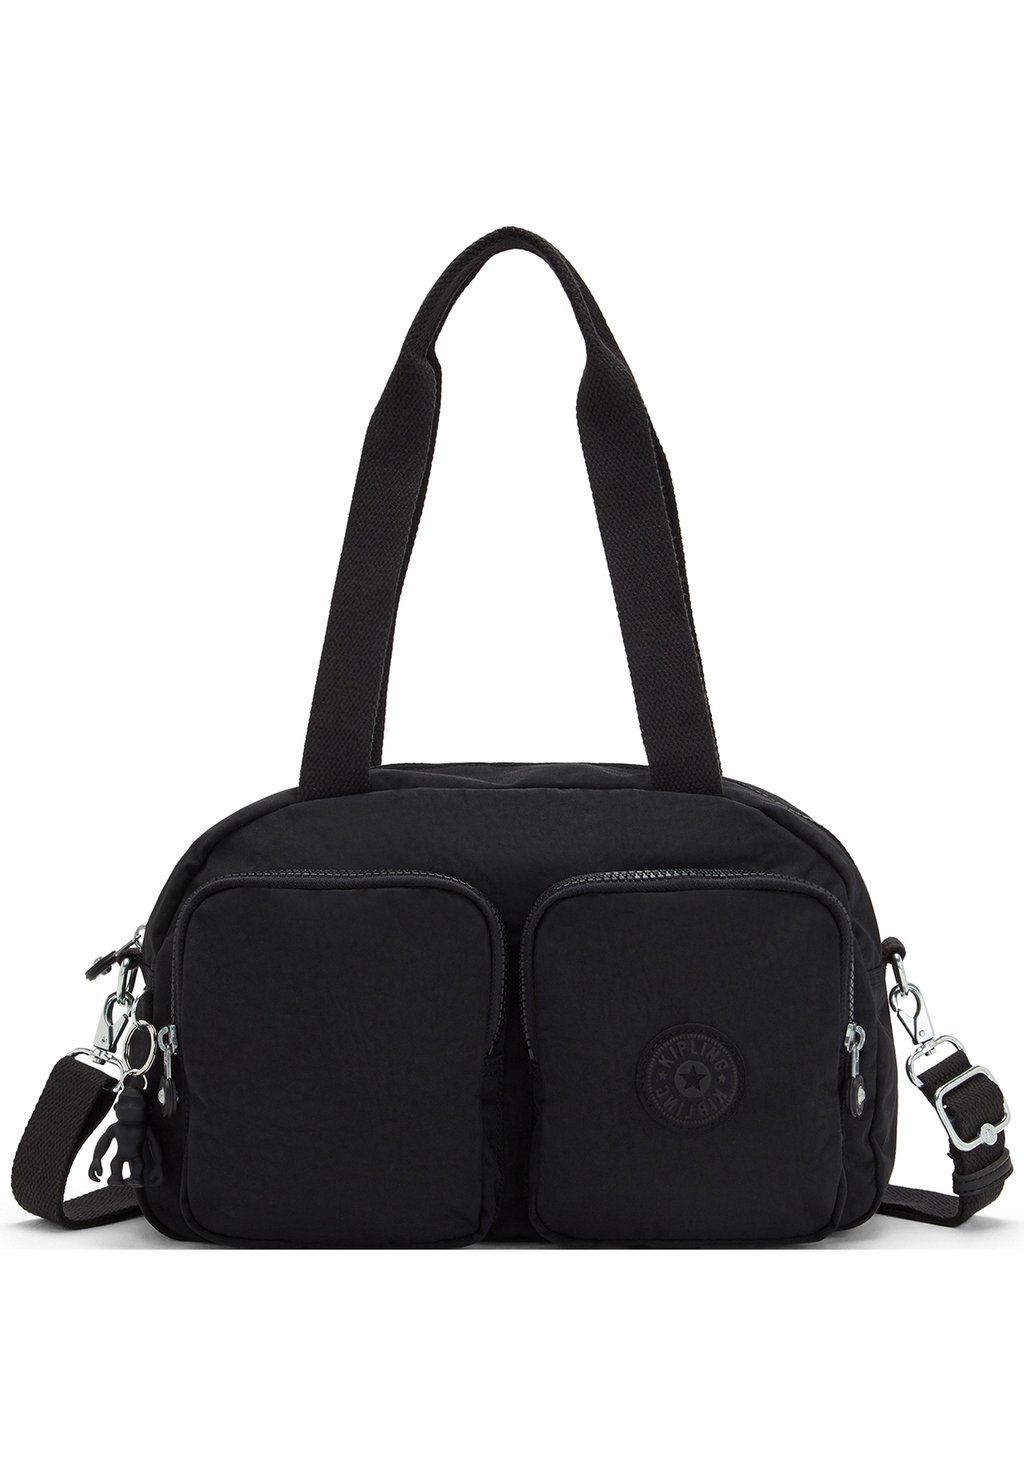 Сумка через плечо Kipling Basic Cool Defea, черный сумка ki601748i cool defea medium shoulder bag 48i metallic glow